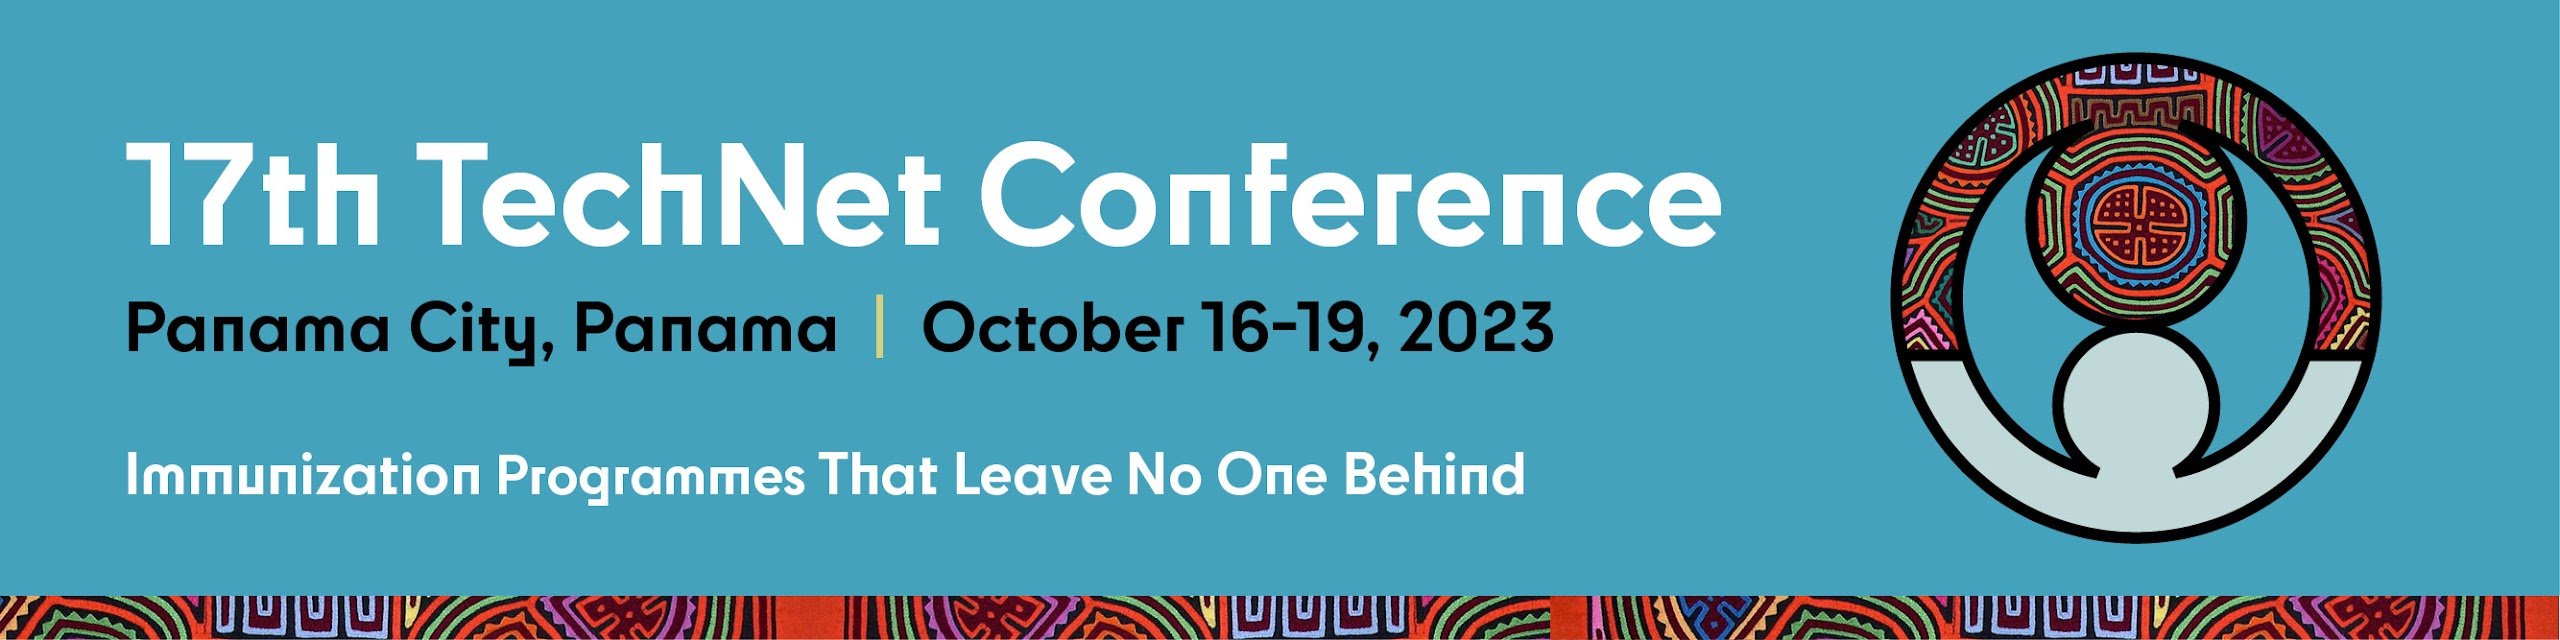 TECHNET 2023Conference Logo Banner 2